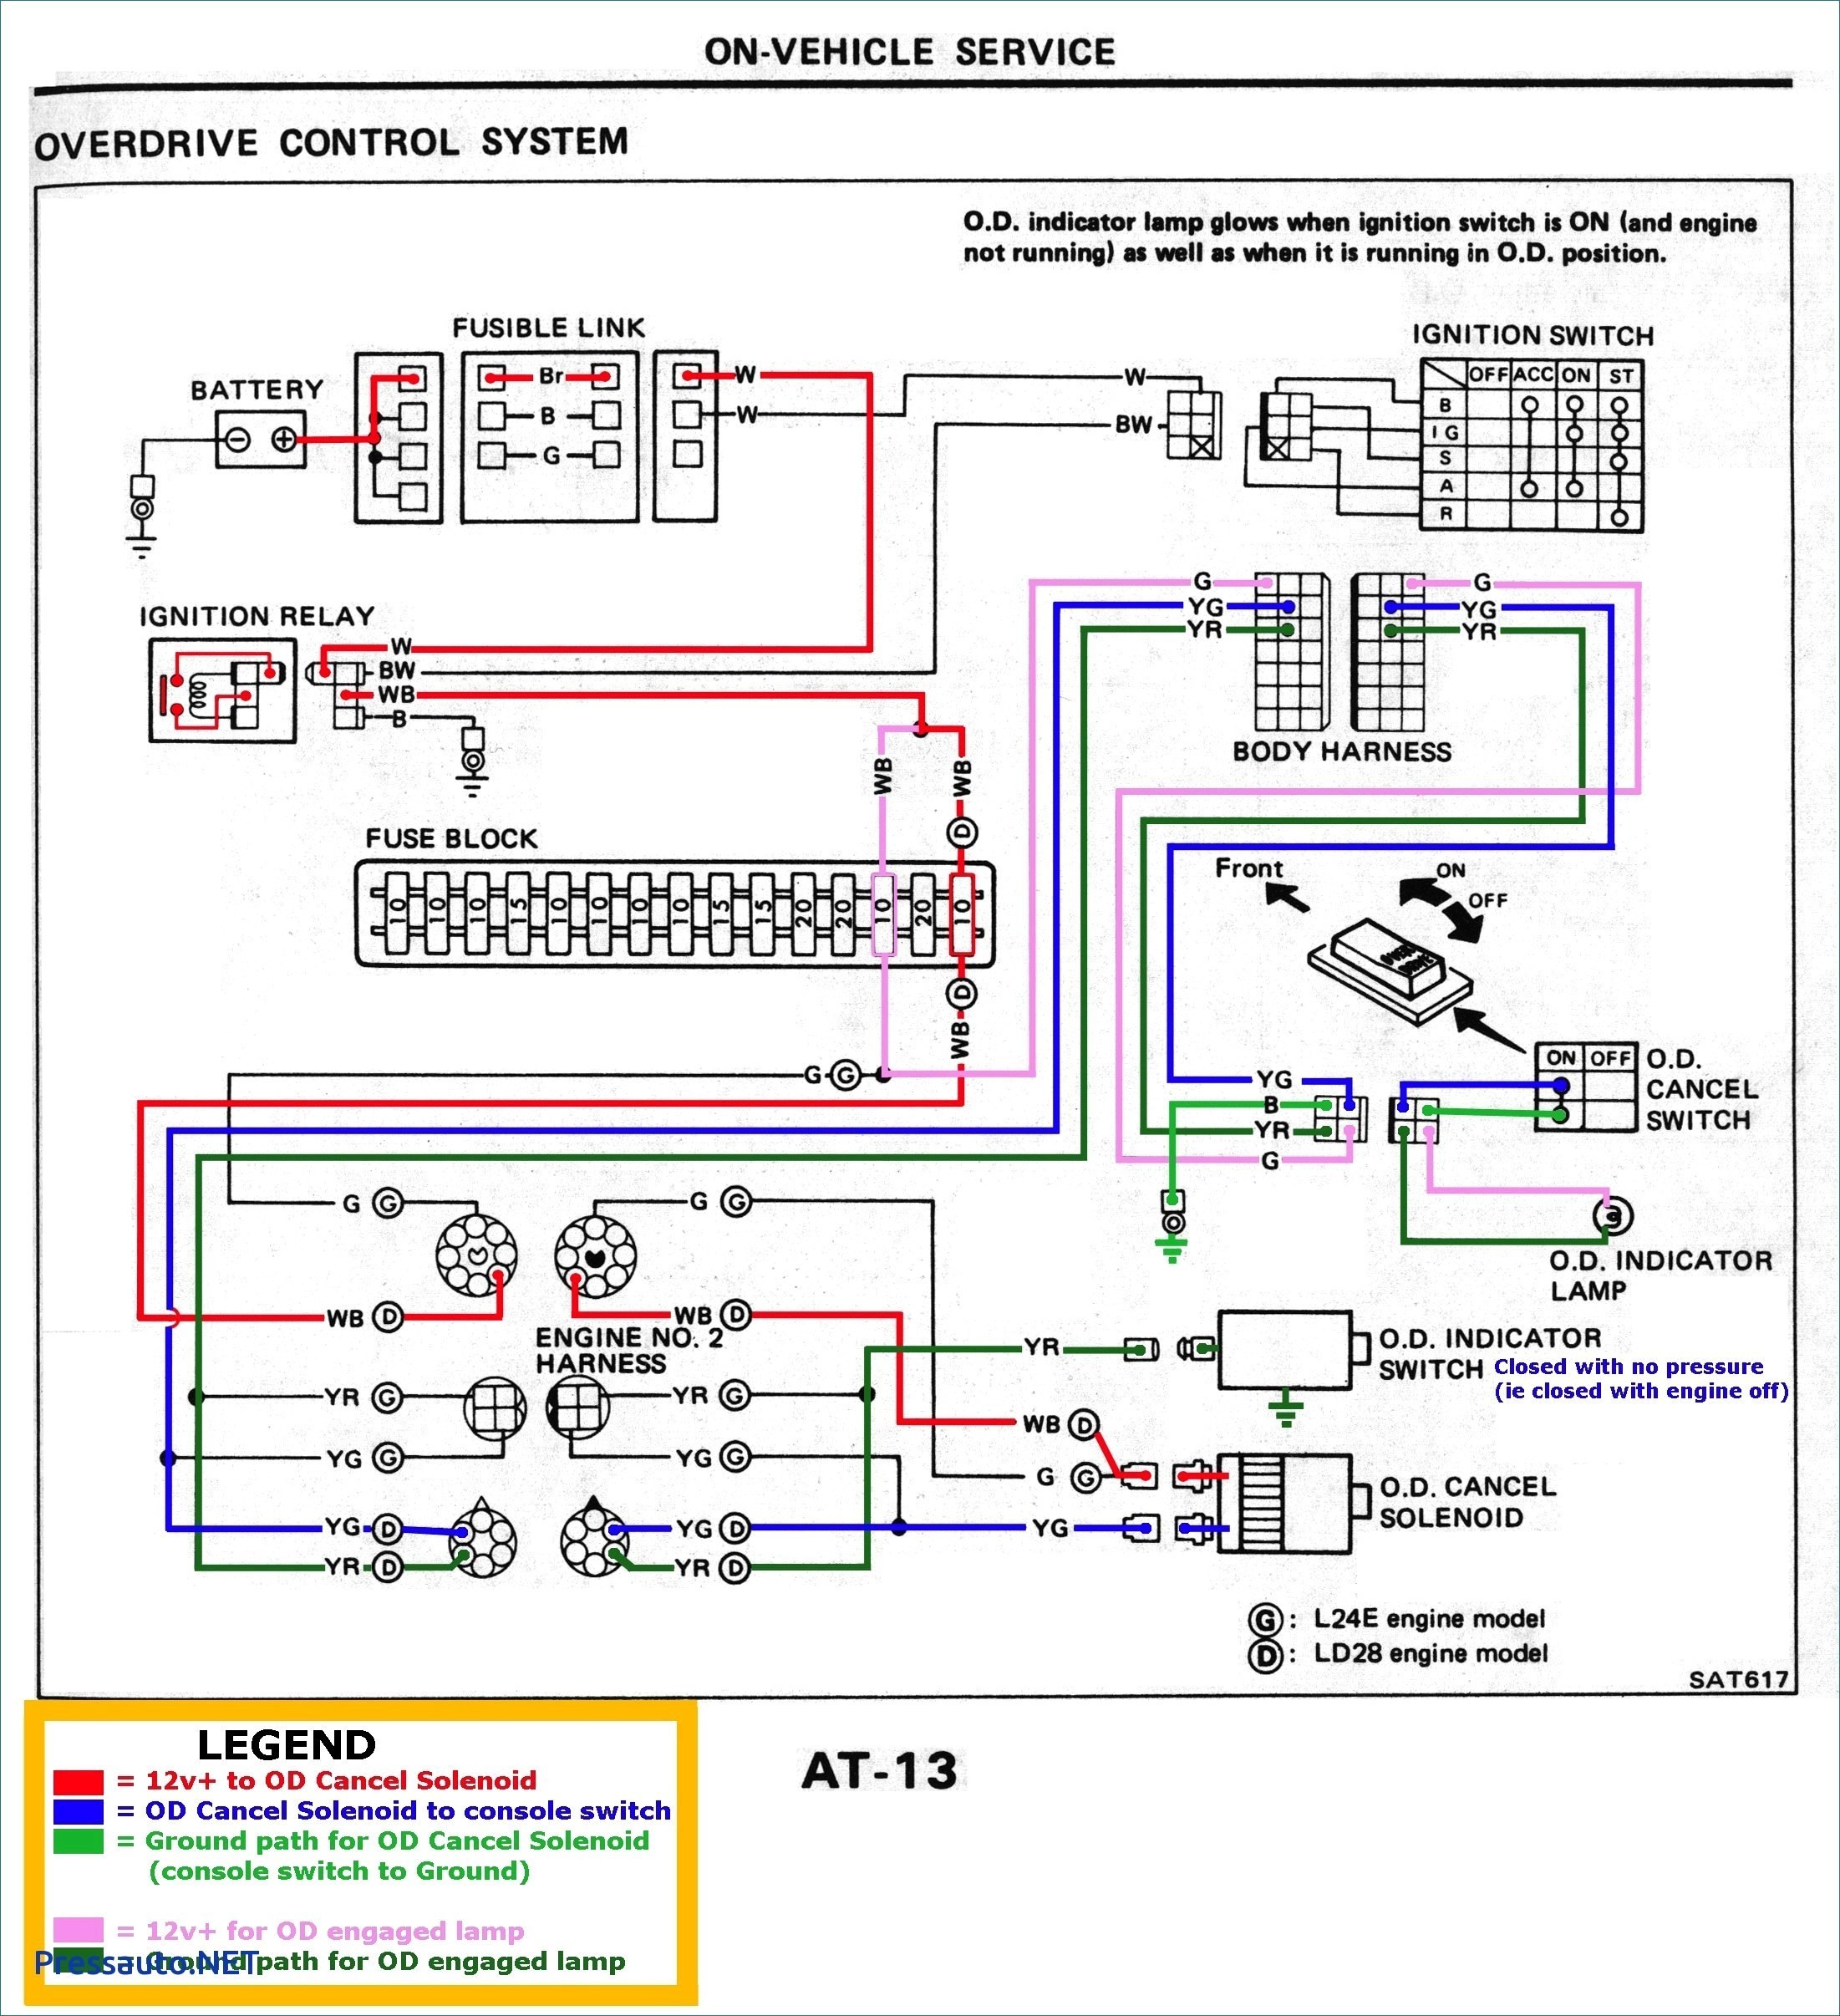 Simple Car Wiring Diagram Wiring Diagram App Ipad Refrence Circuit Diagram Web App Valid Of Simple Car Wiring Diagram